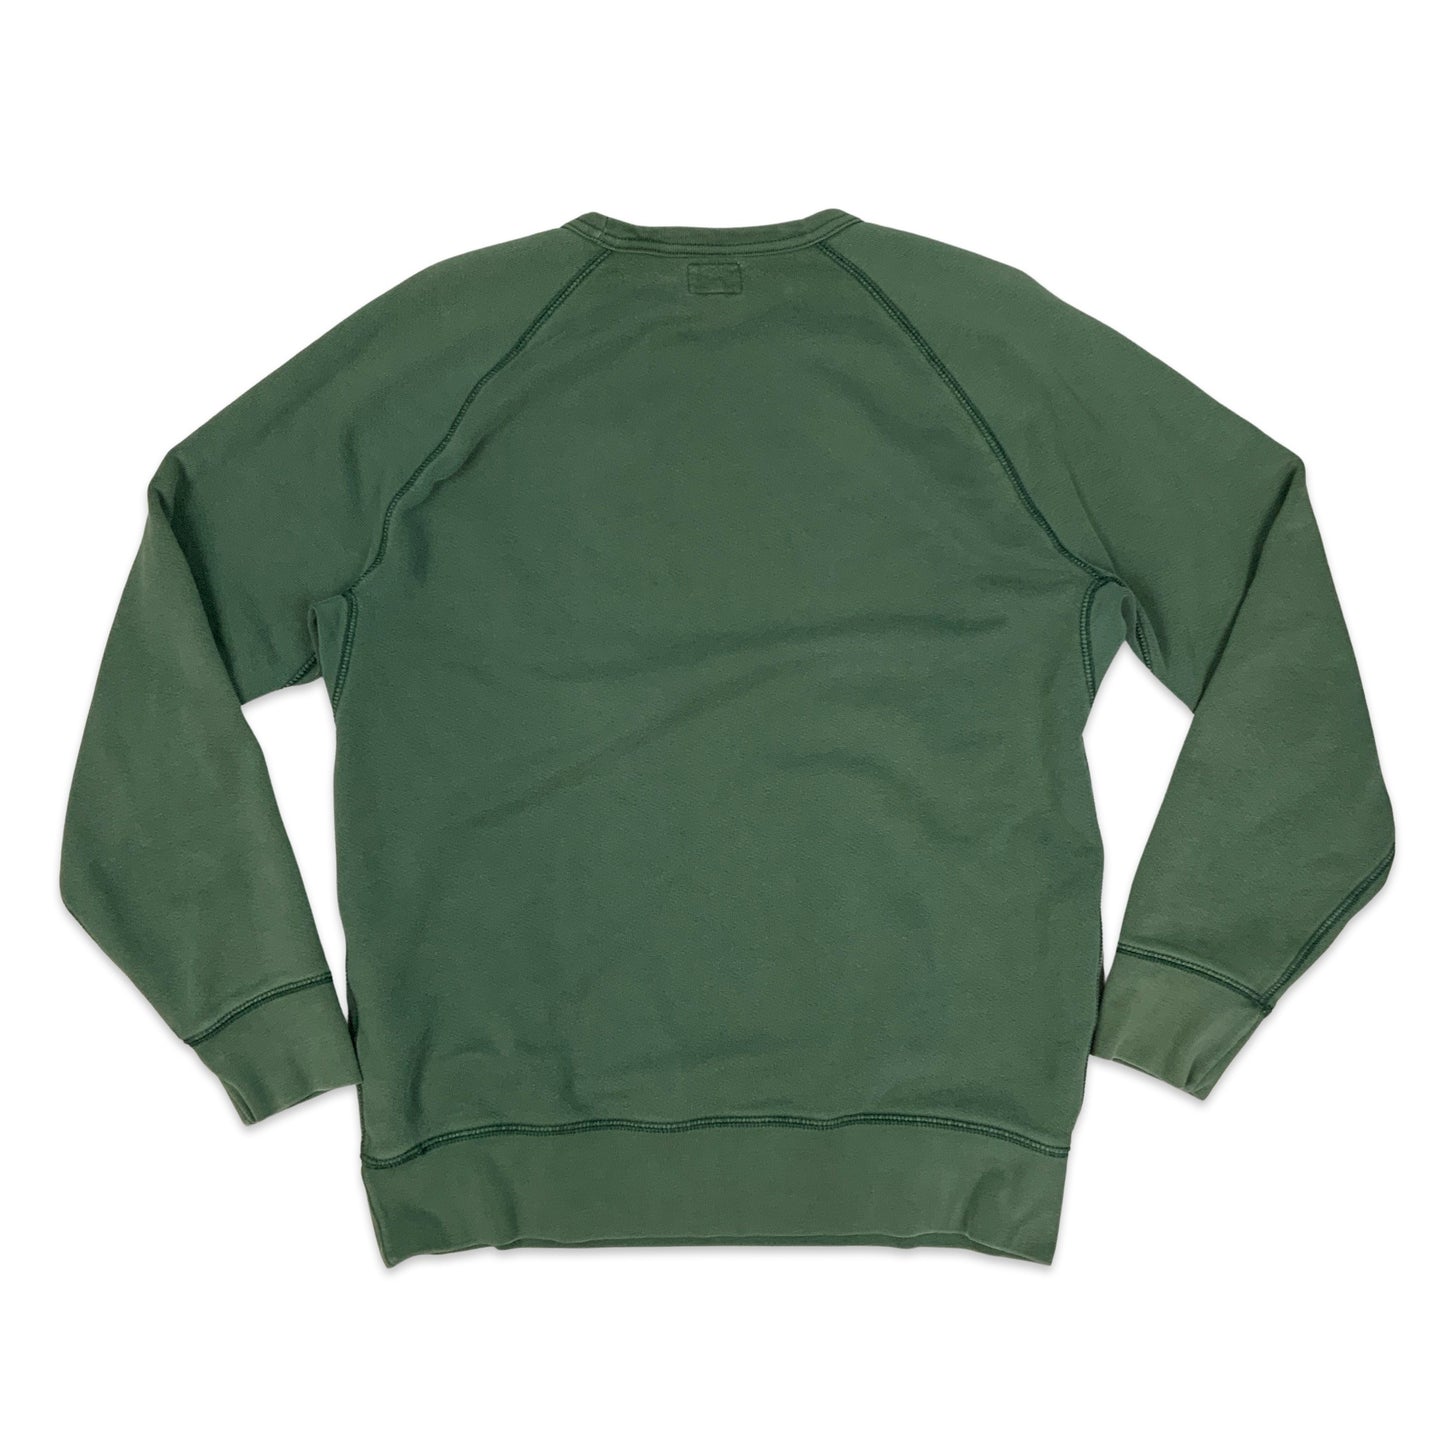 Levi's Green Crew Neck Sweatshirt S M